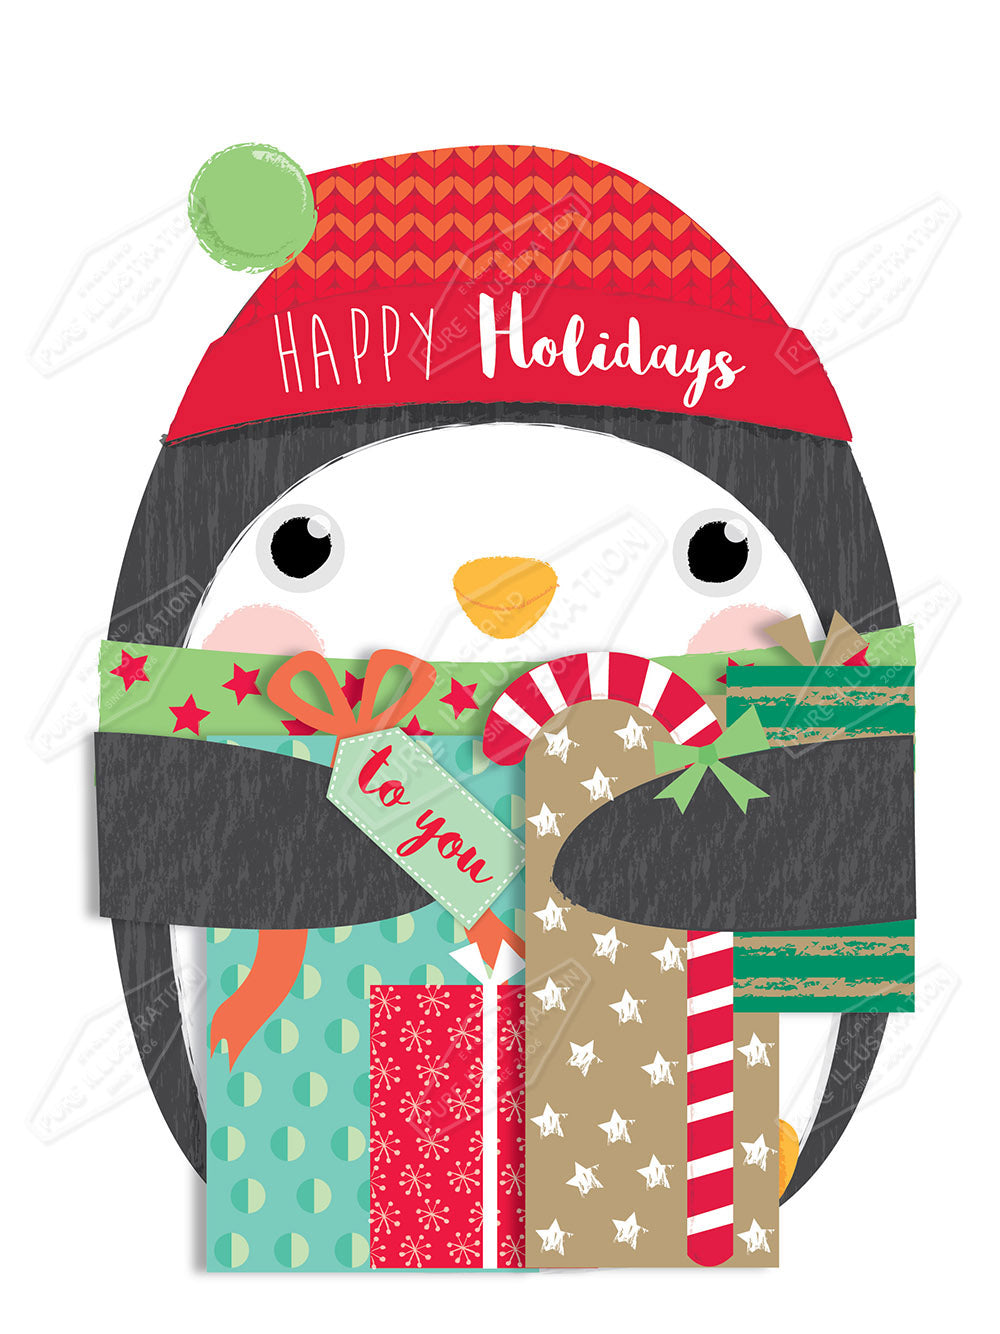 00032142AMC - Amanda McDonough is represented by Pure Art Licensing Agency - Christmas Greeting Card Design